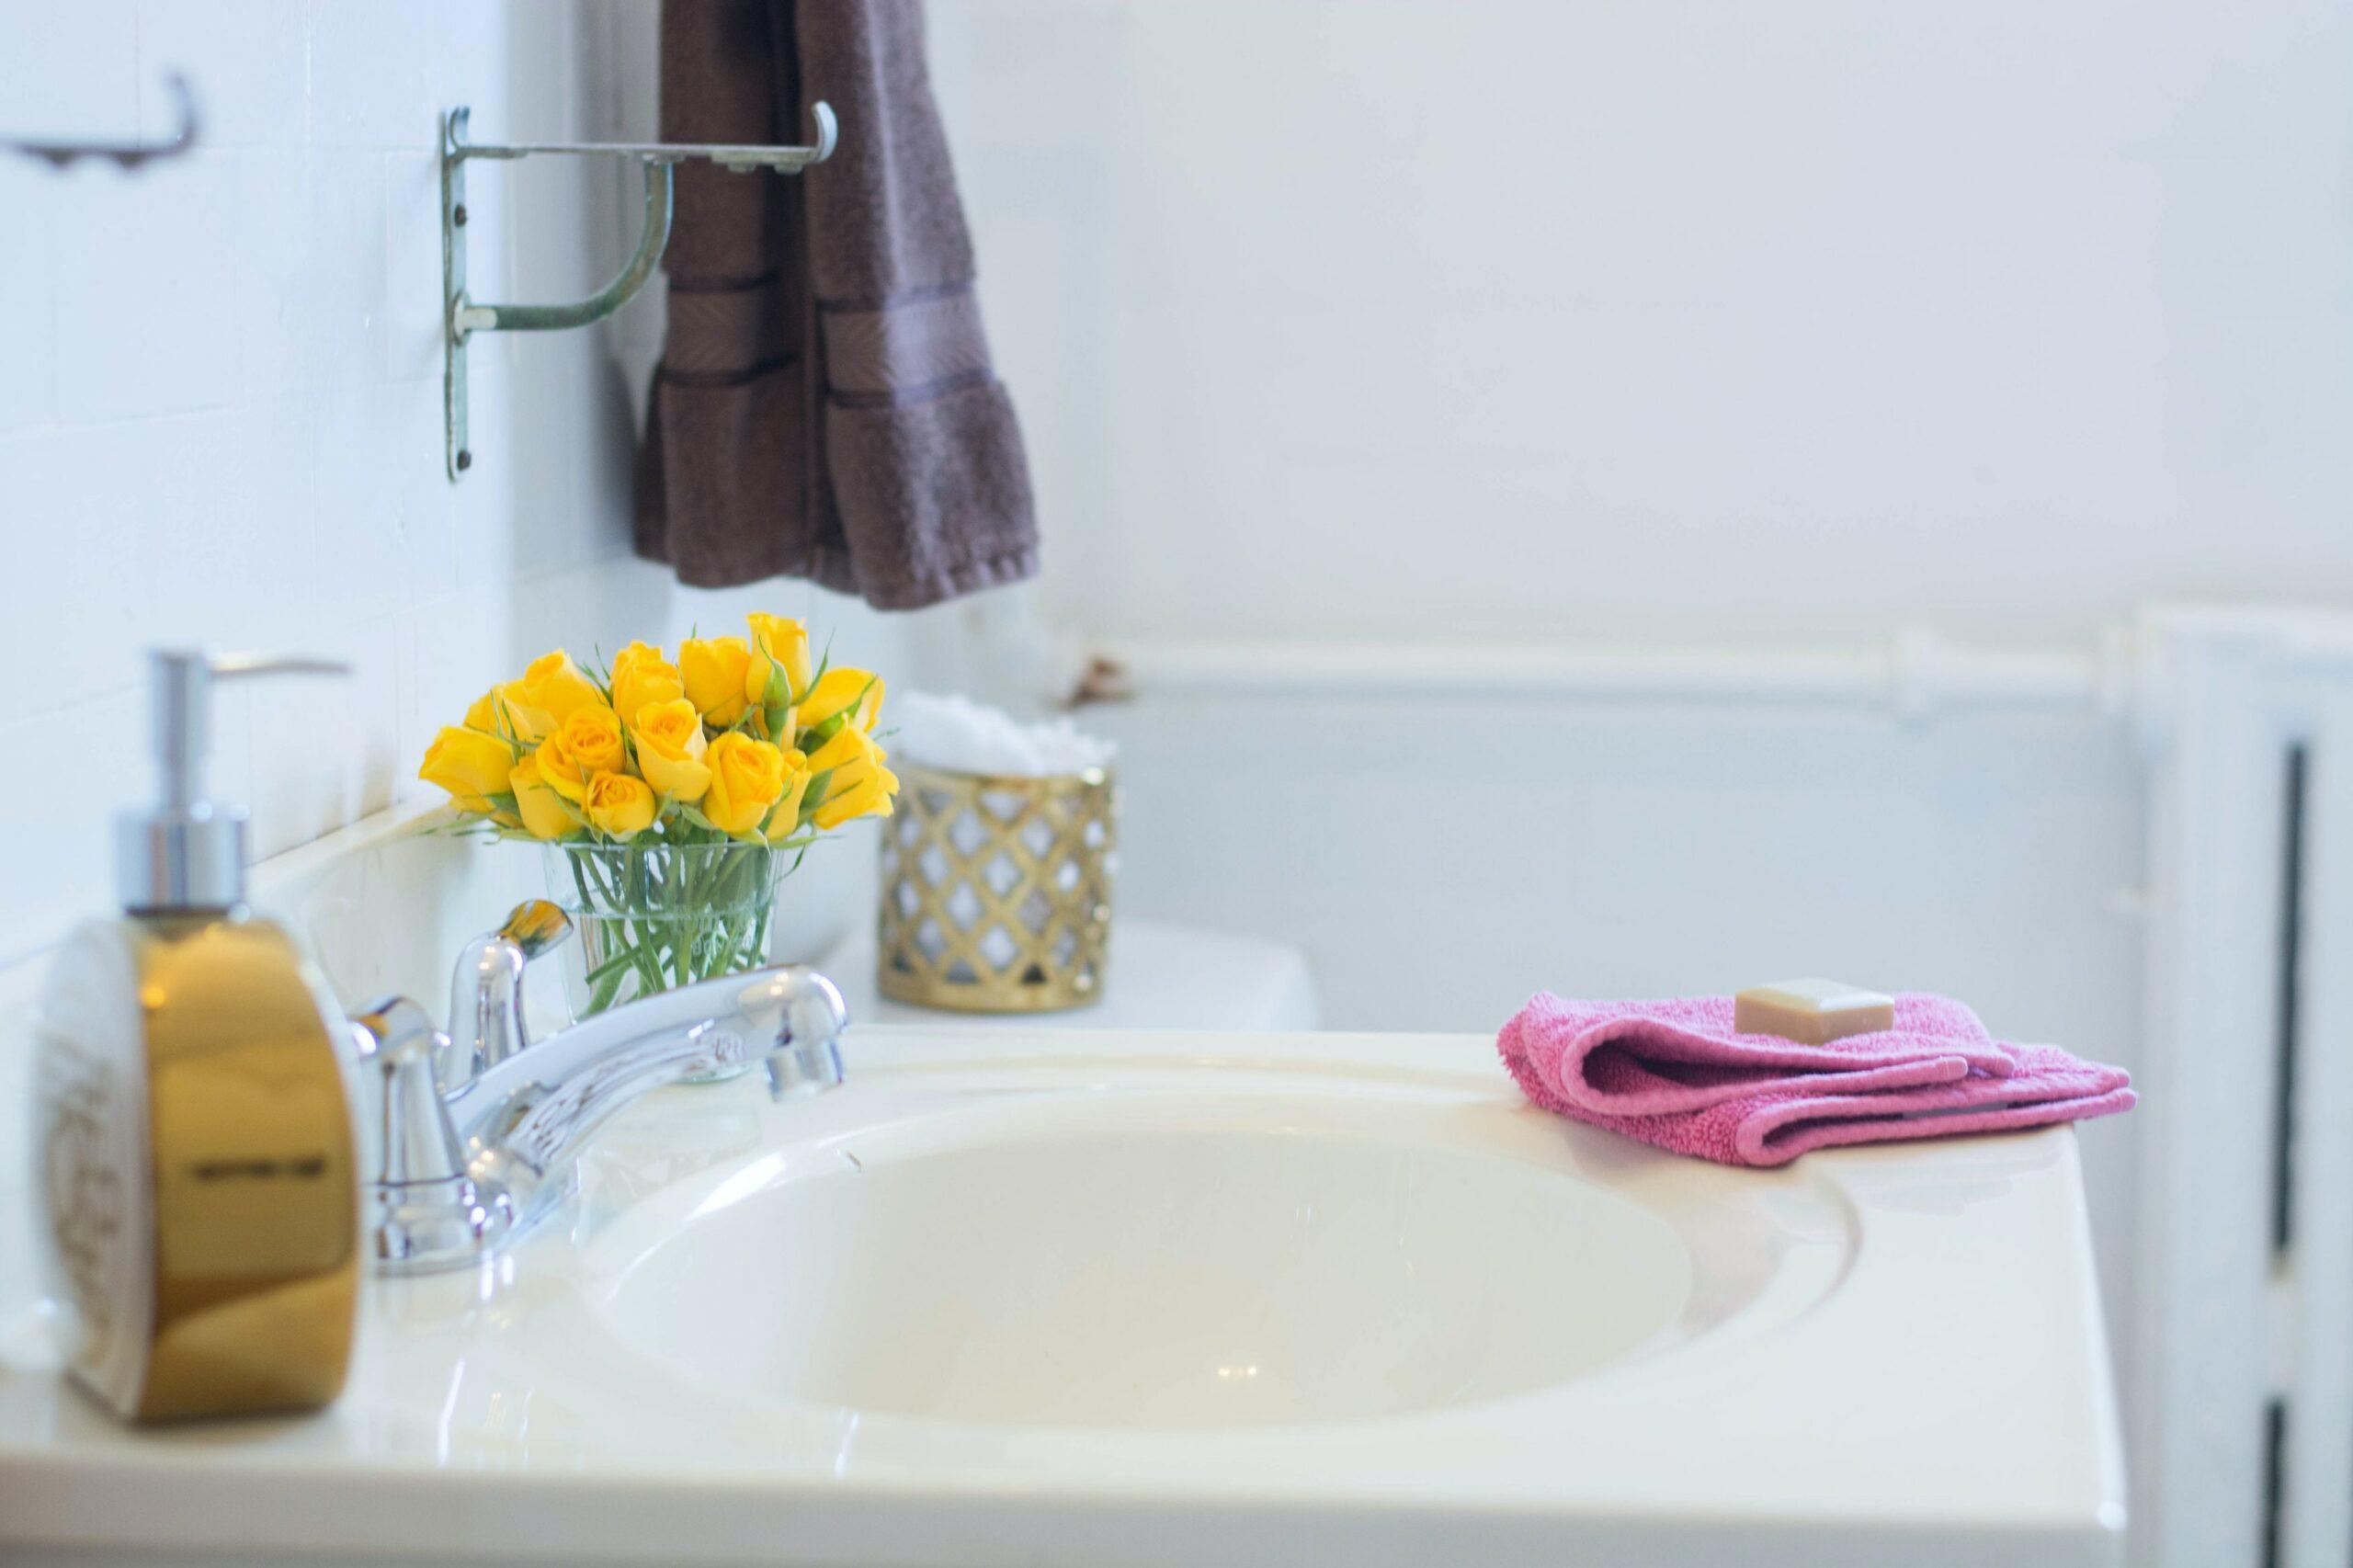 How to Keep Bathroom Clean and Fresh